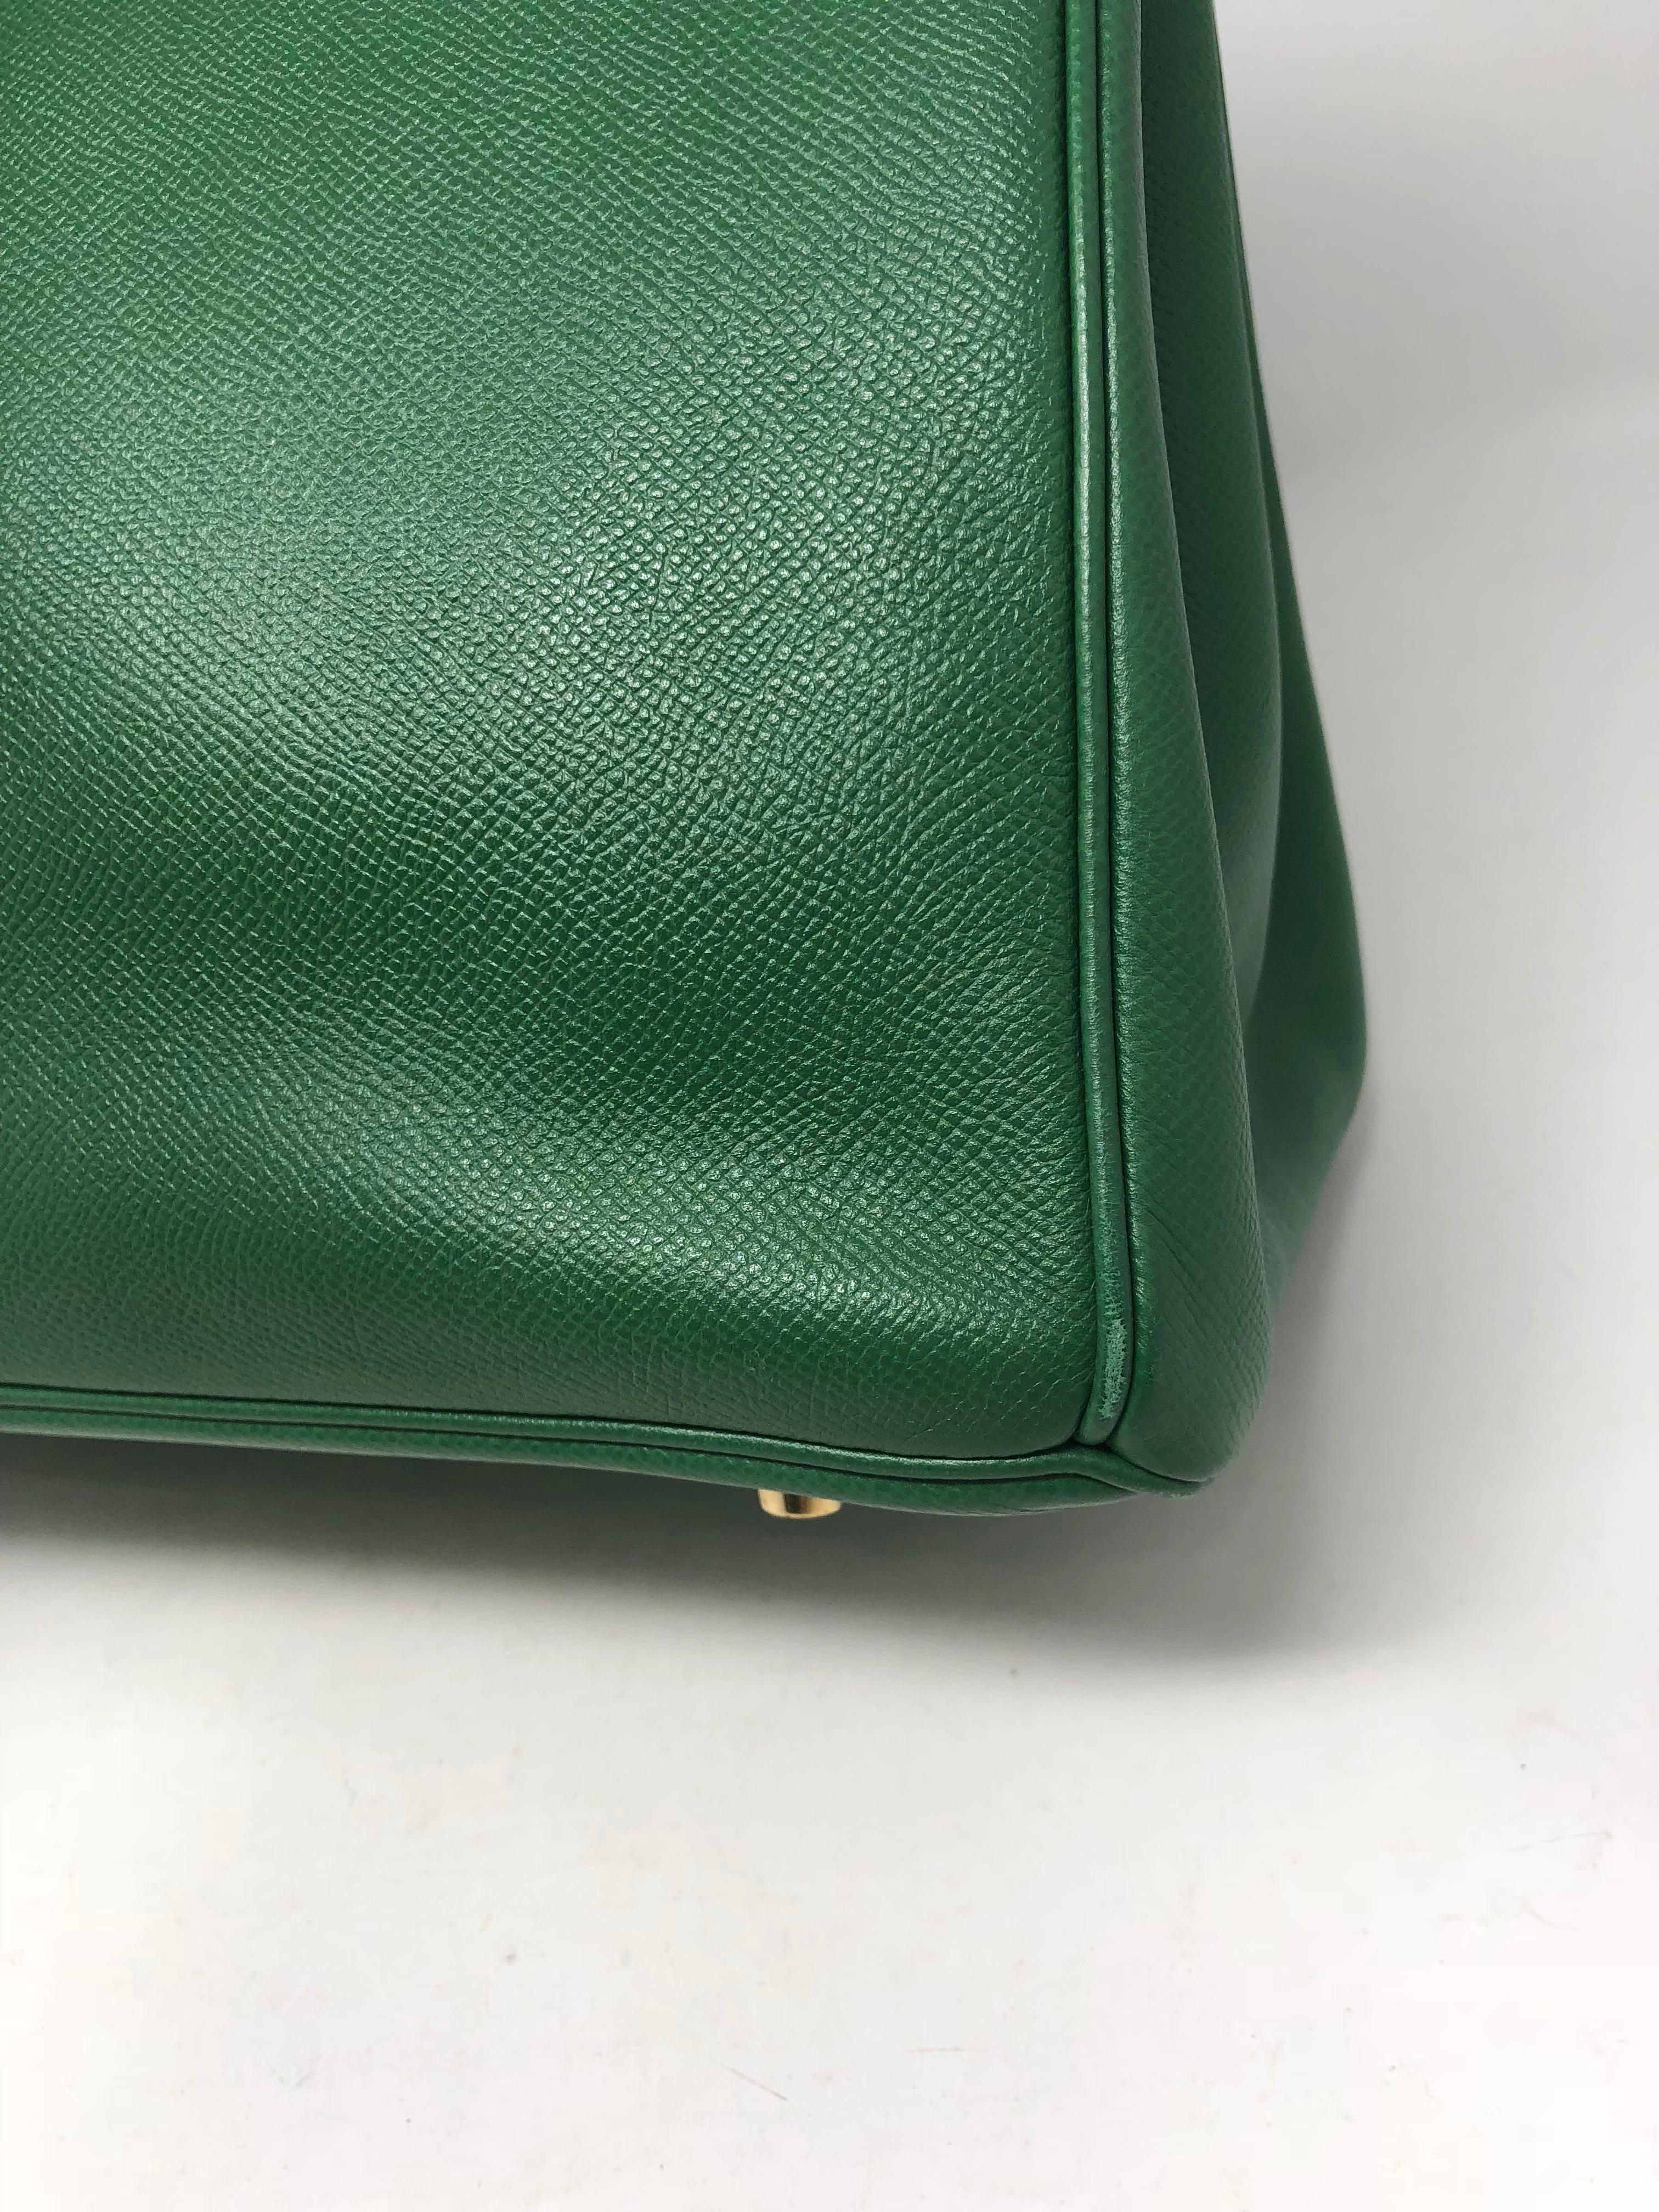 Hermes Emerald Green courchevel leather Gold hardware Birkin 35 Bag 6